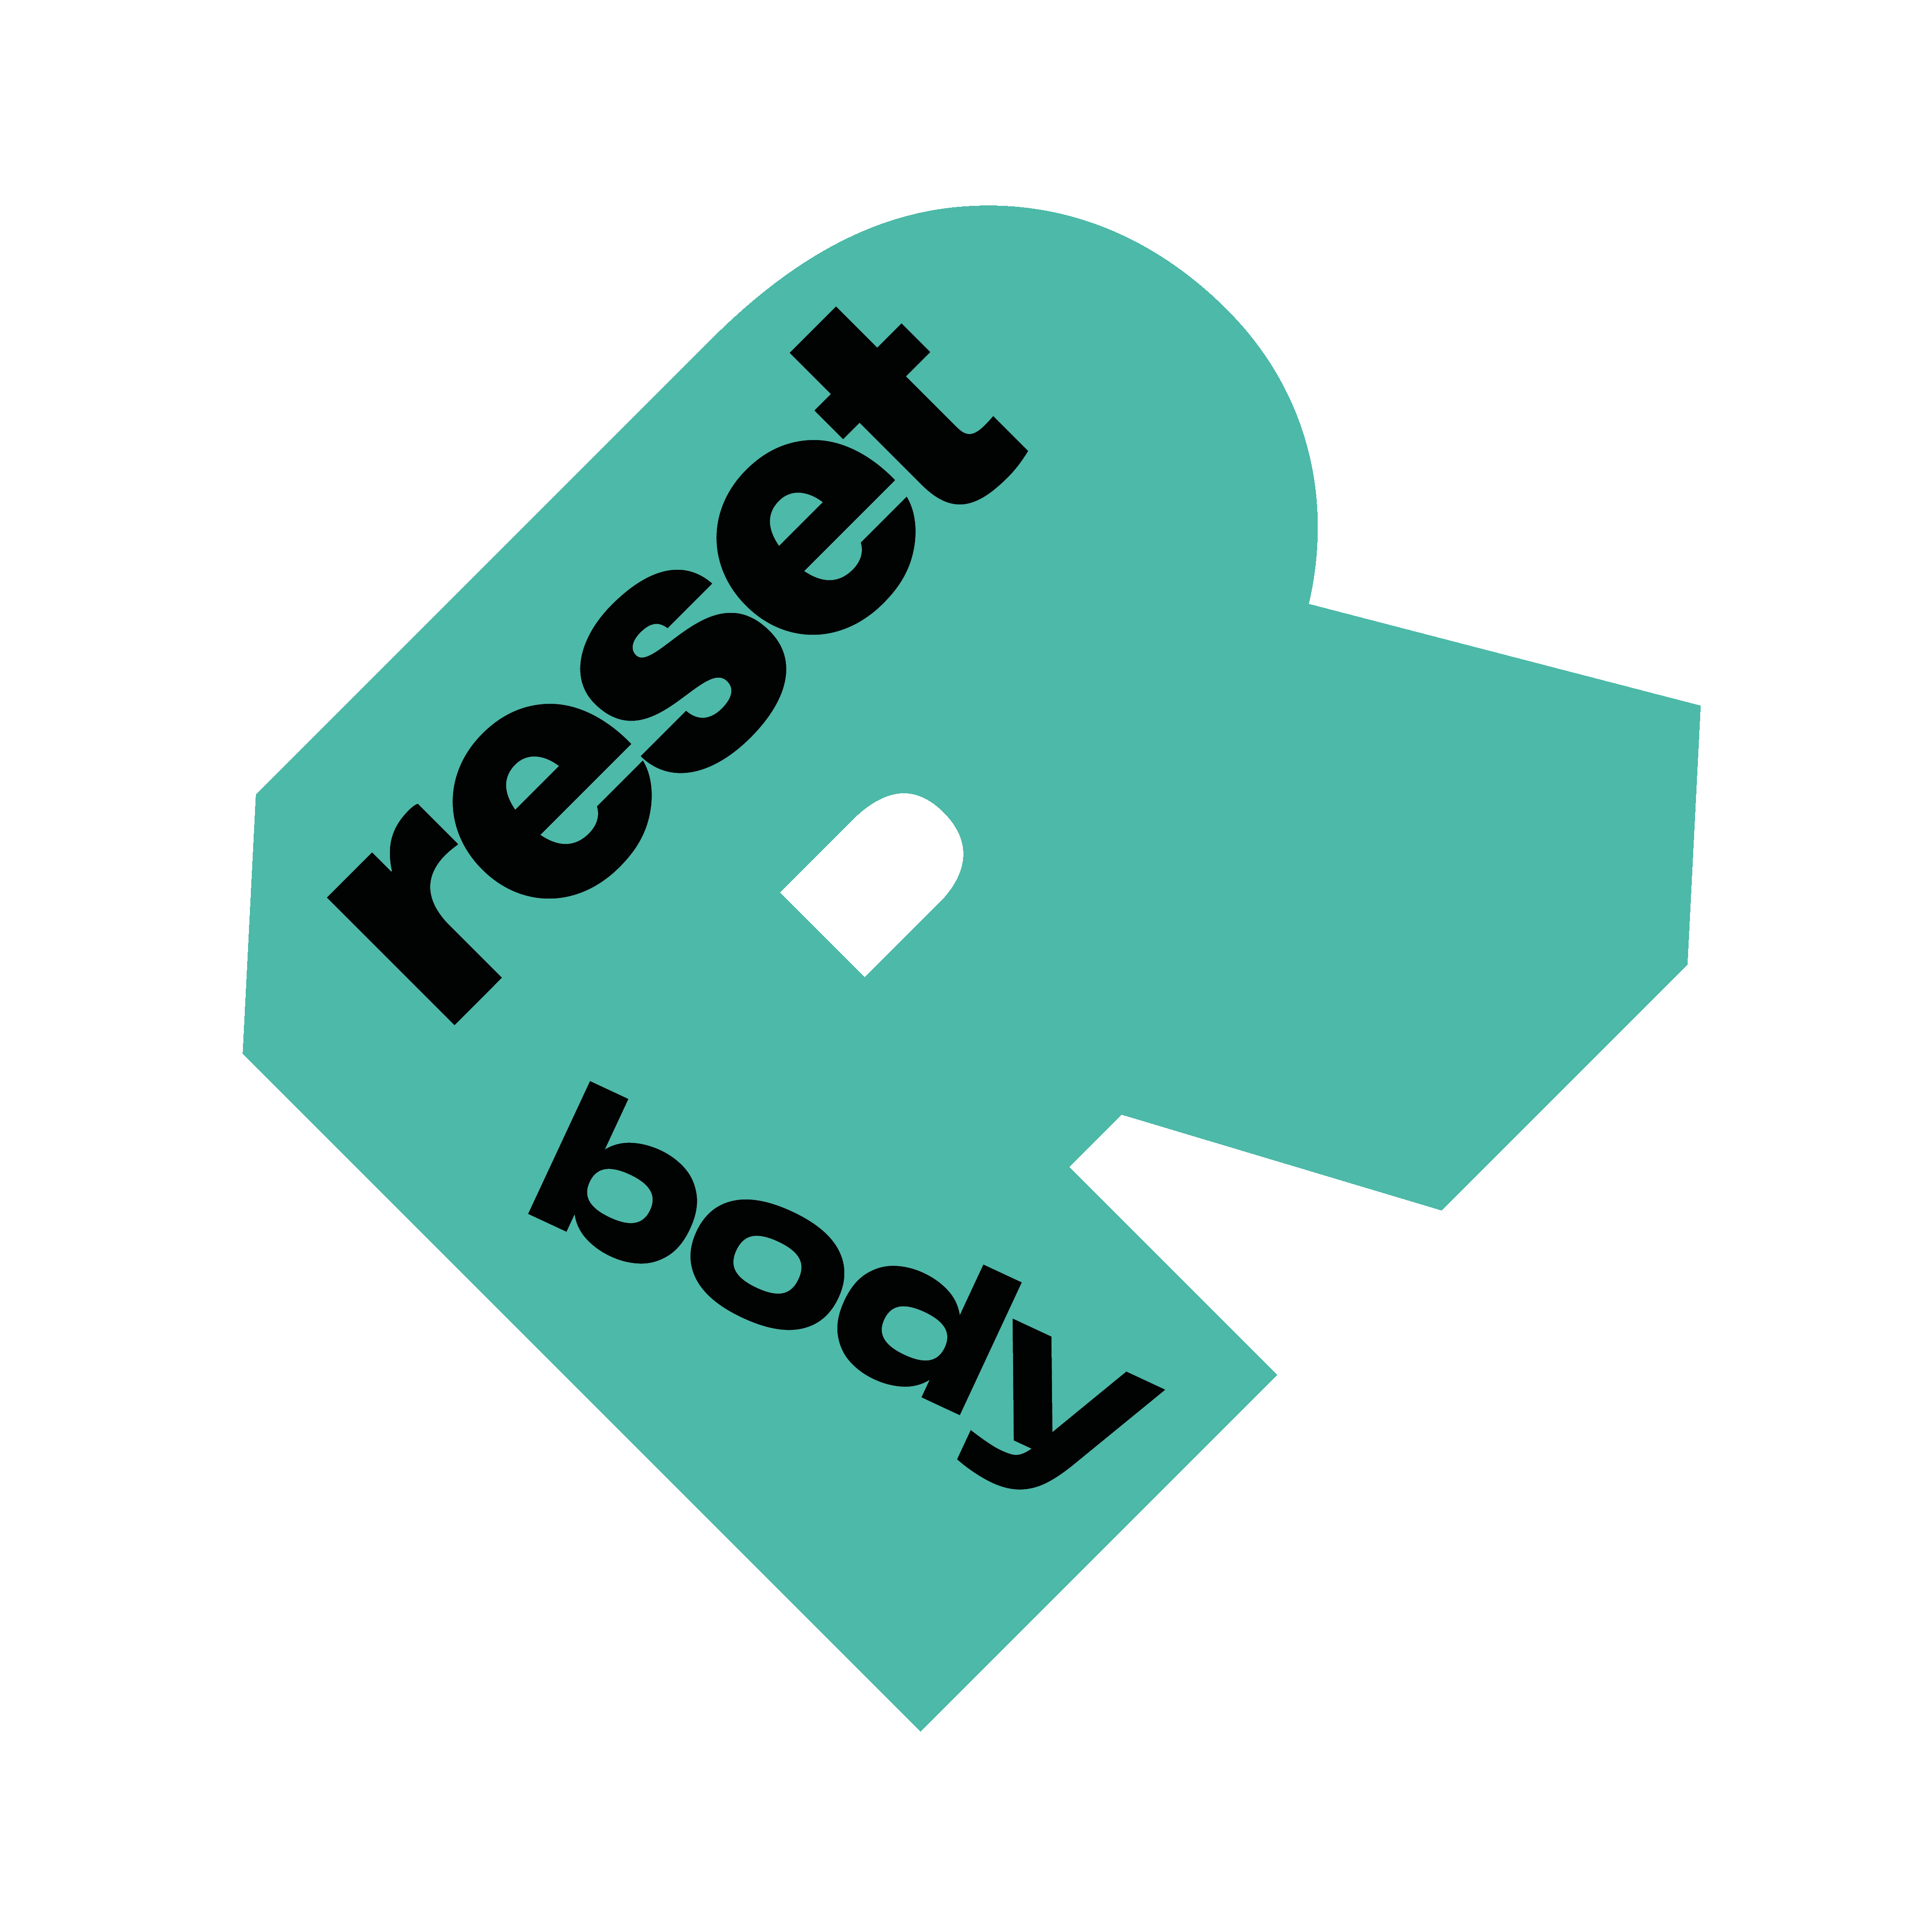 Reset your body